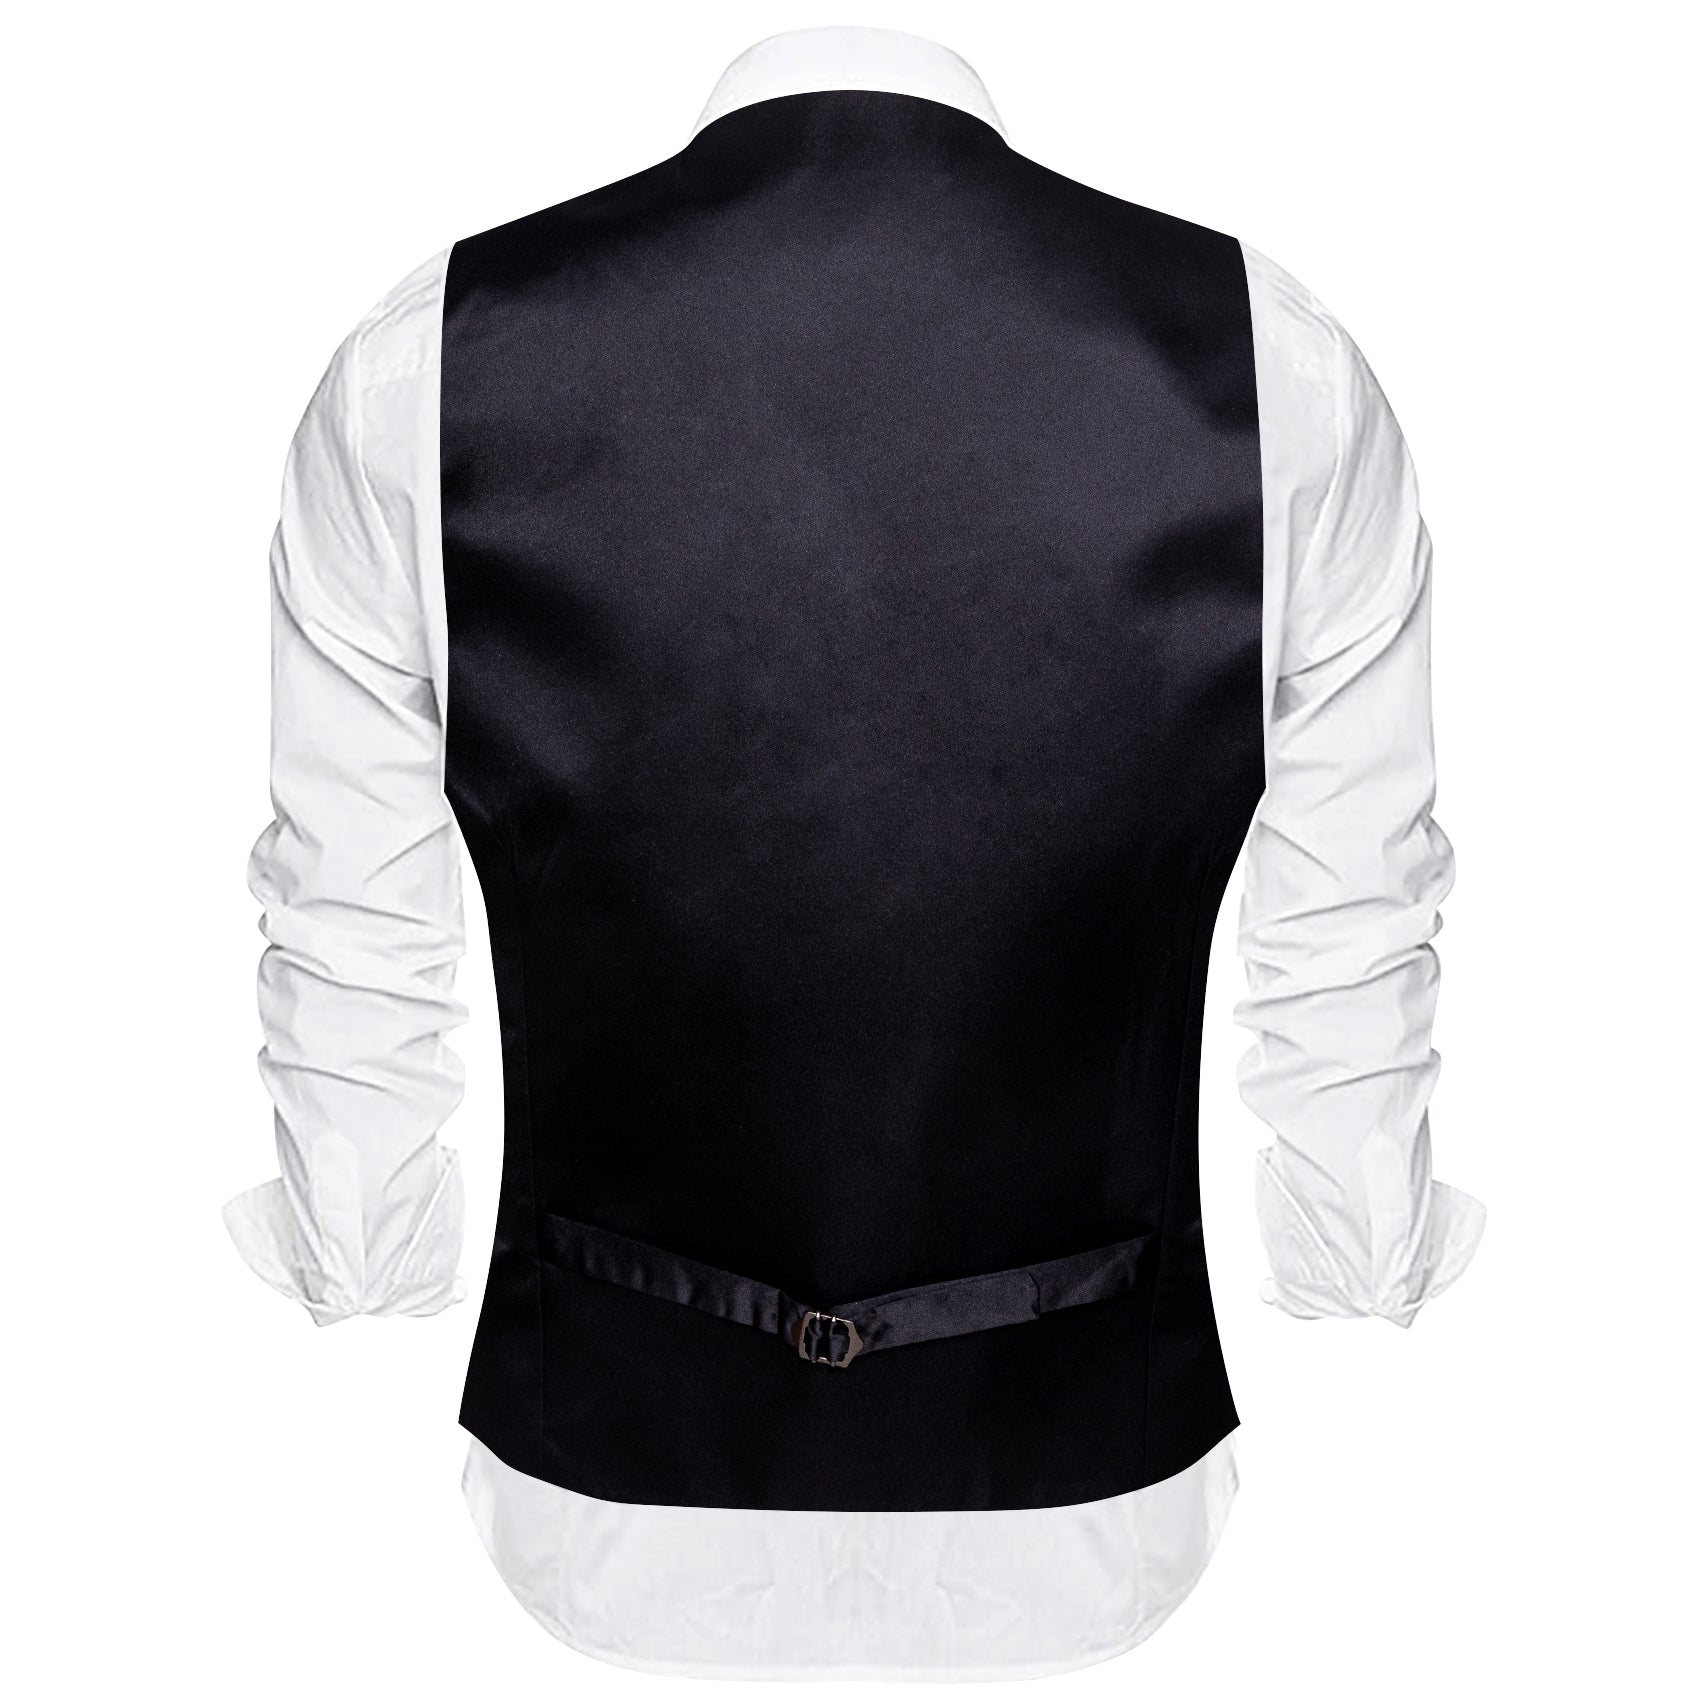 Barry.wang Light Coral Solid Business Vest Suit